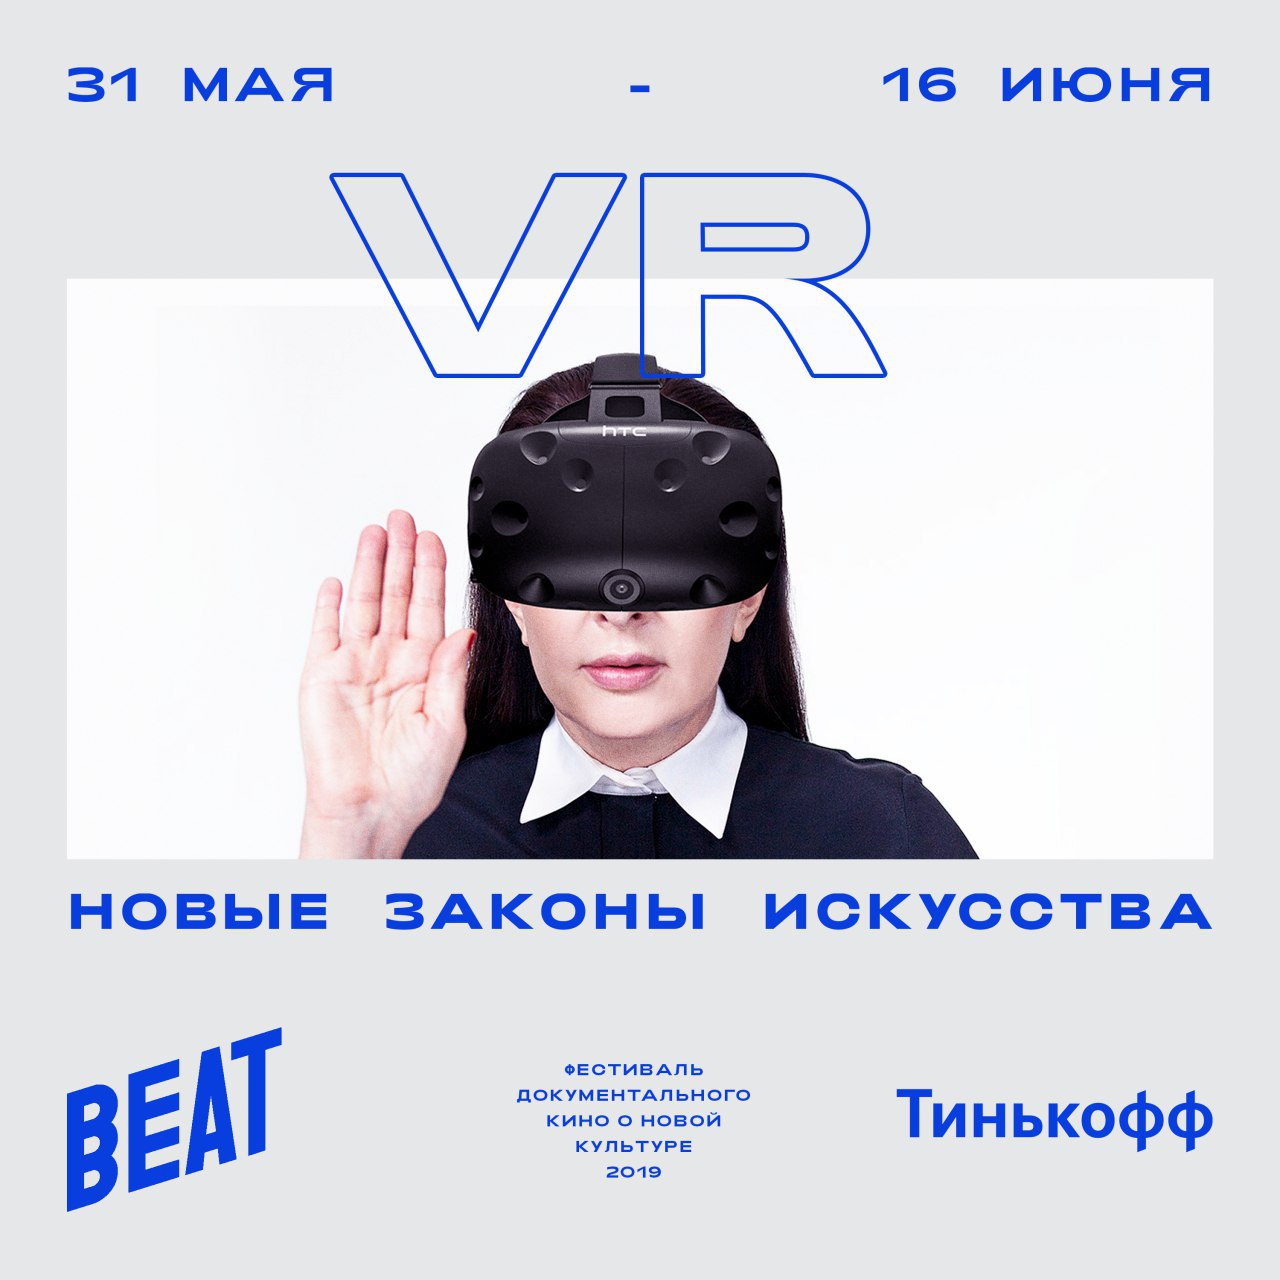 Beat Film Festival и Тинькофф представляют VR выставку